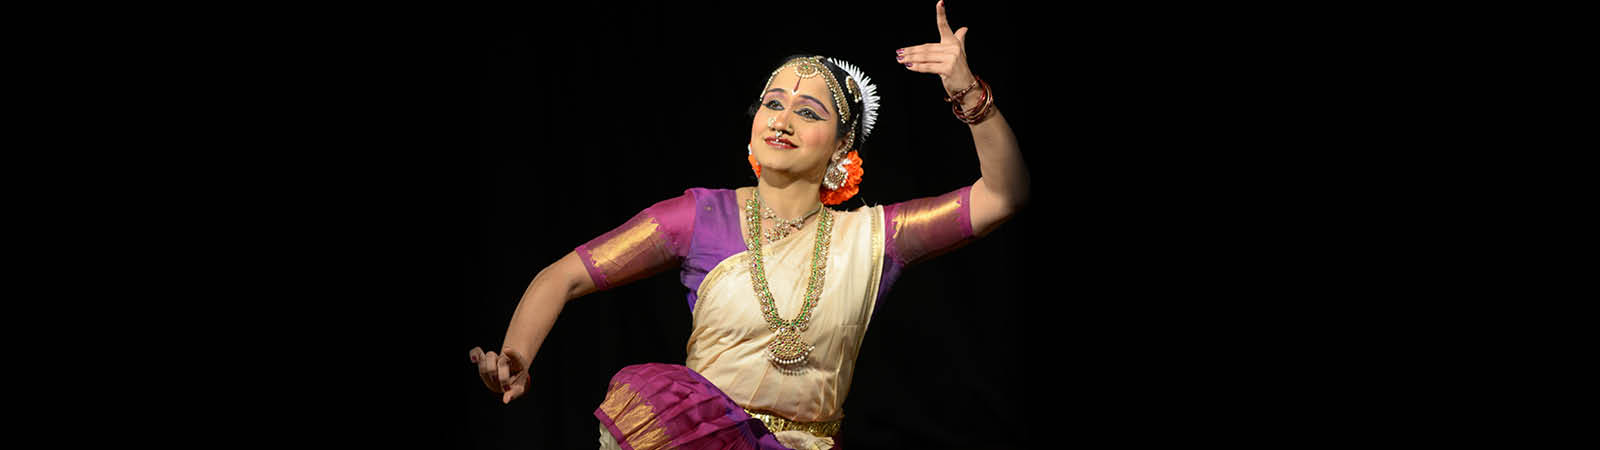 Samsara Nritya: Embracing Dualities through Indian Classical Dance, The  Dance Complex at The Dance Complex, Cambridge MA, Watch